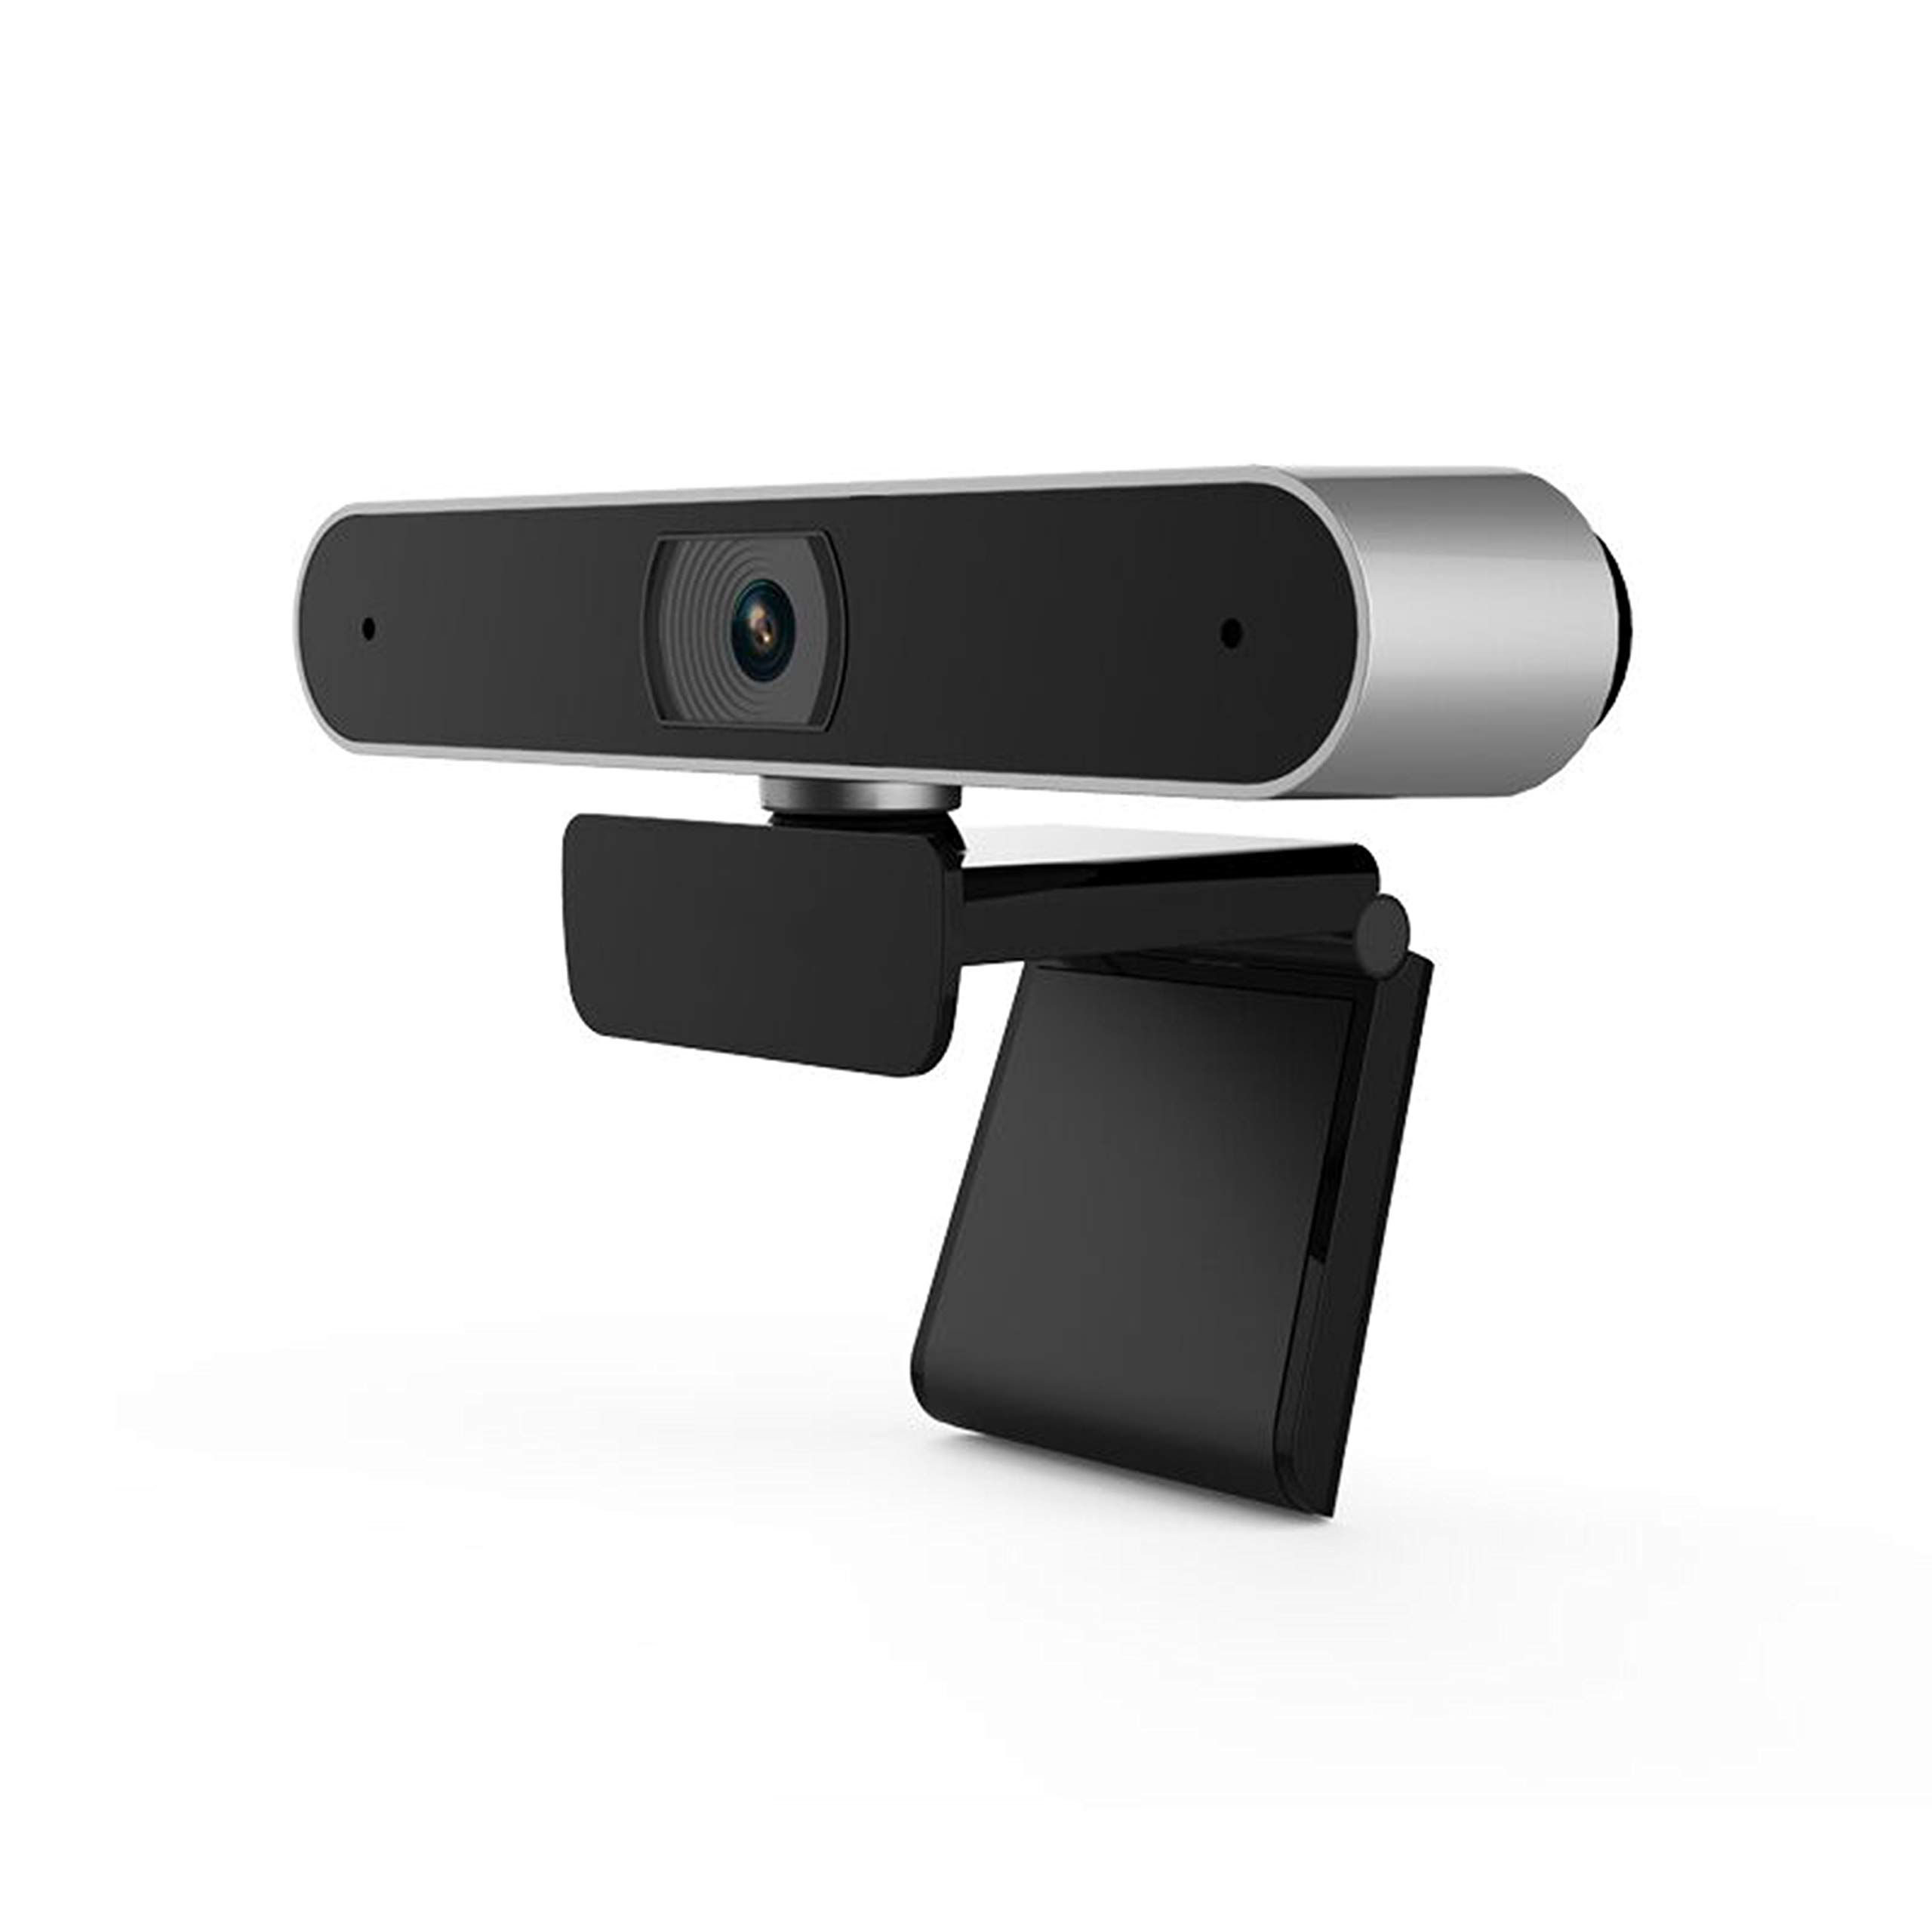 Webcam T300 - CSL Full-HD-Webcam, 1920x1080@30Hz, integriertes Mikrofon, Klemmhalterung, Autofokus, 90° Aufnahmewinkel, Videochat, Home Office, 1080p